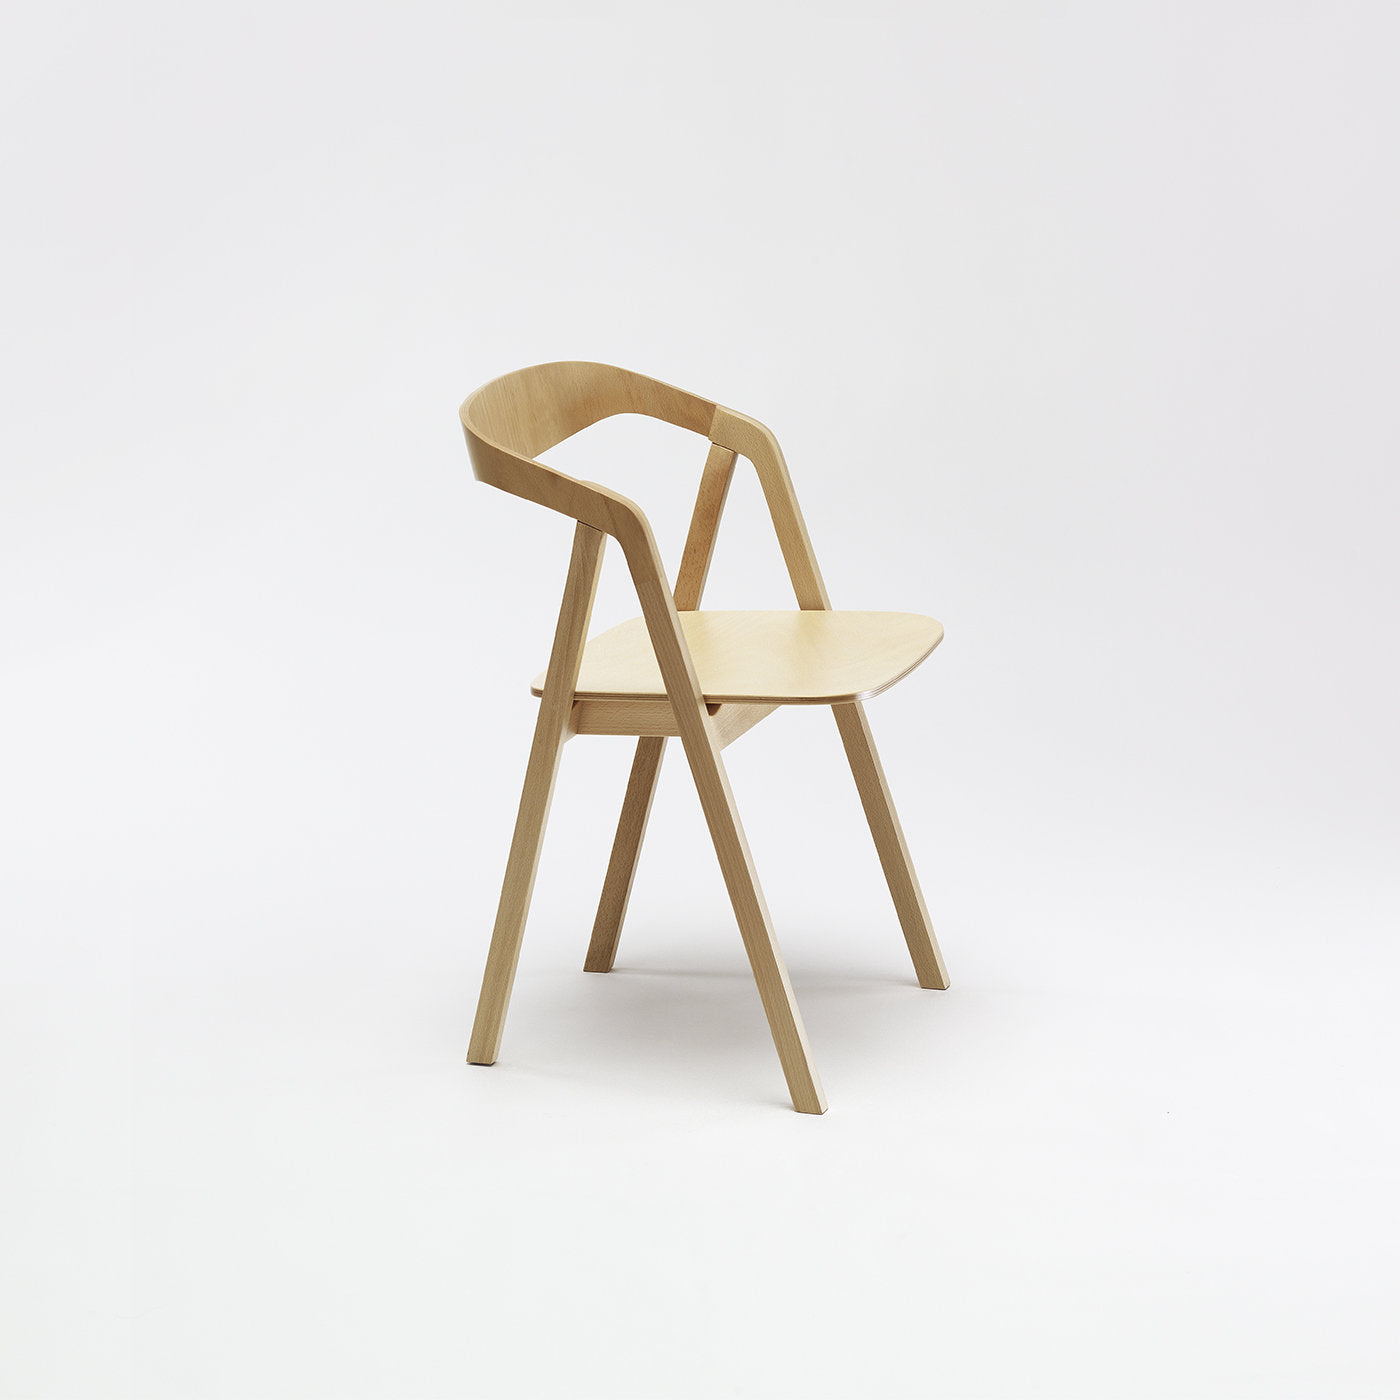 Set of 2 Sta Chairs by Tomoko Azumi - Alternative view 3